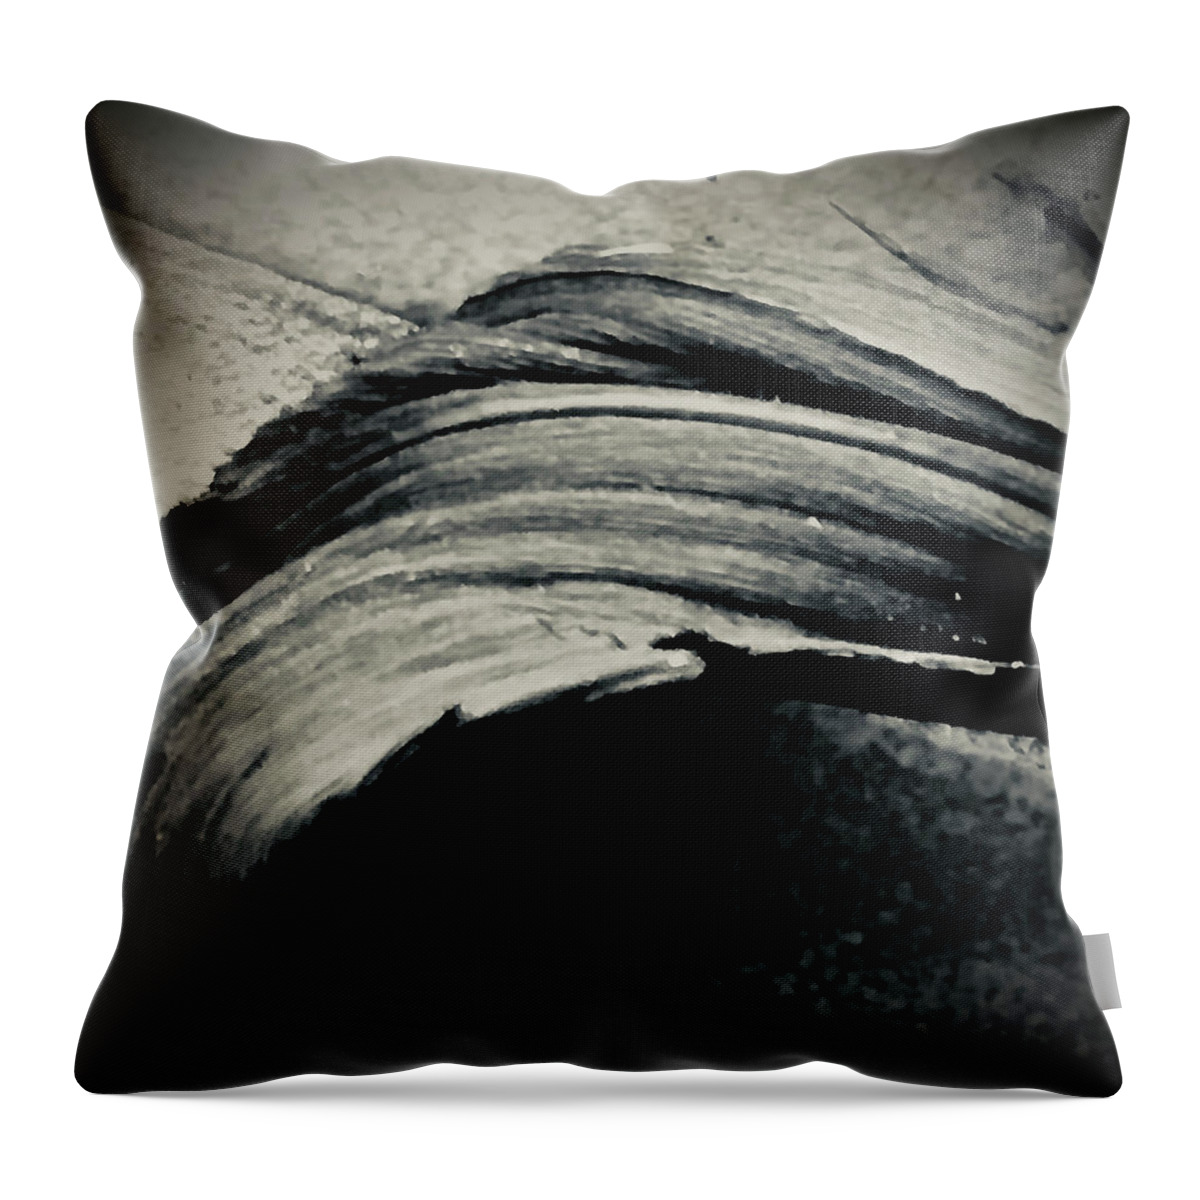  Throw Pillow featuring the digital art Palmistree by Michelle Hoffmann